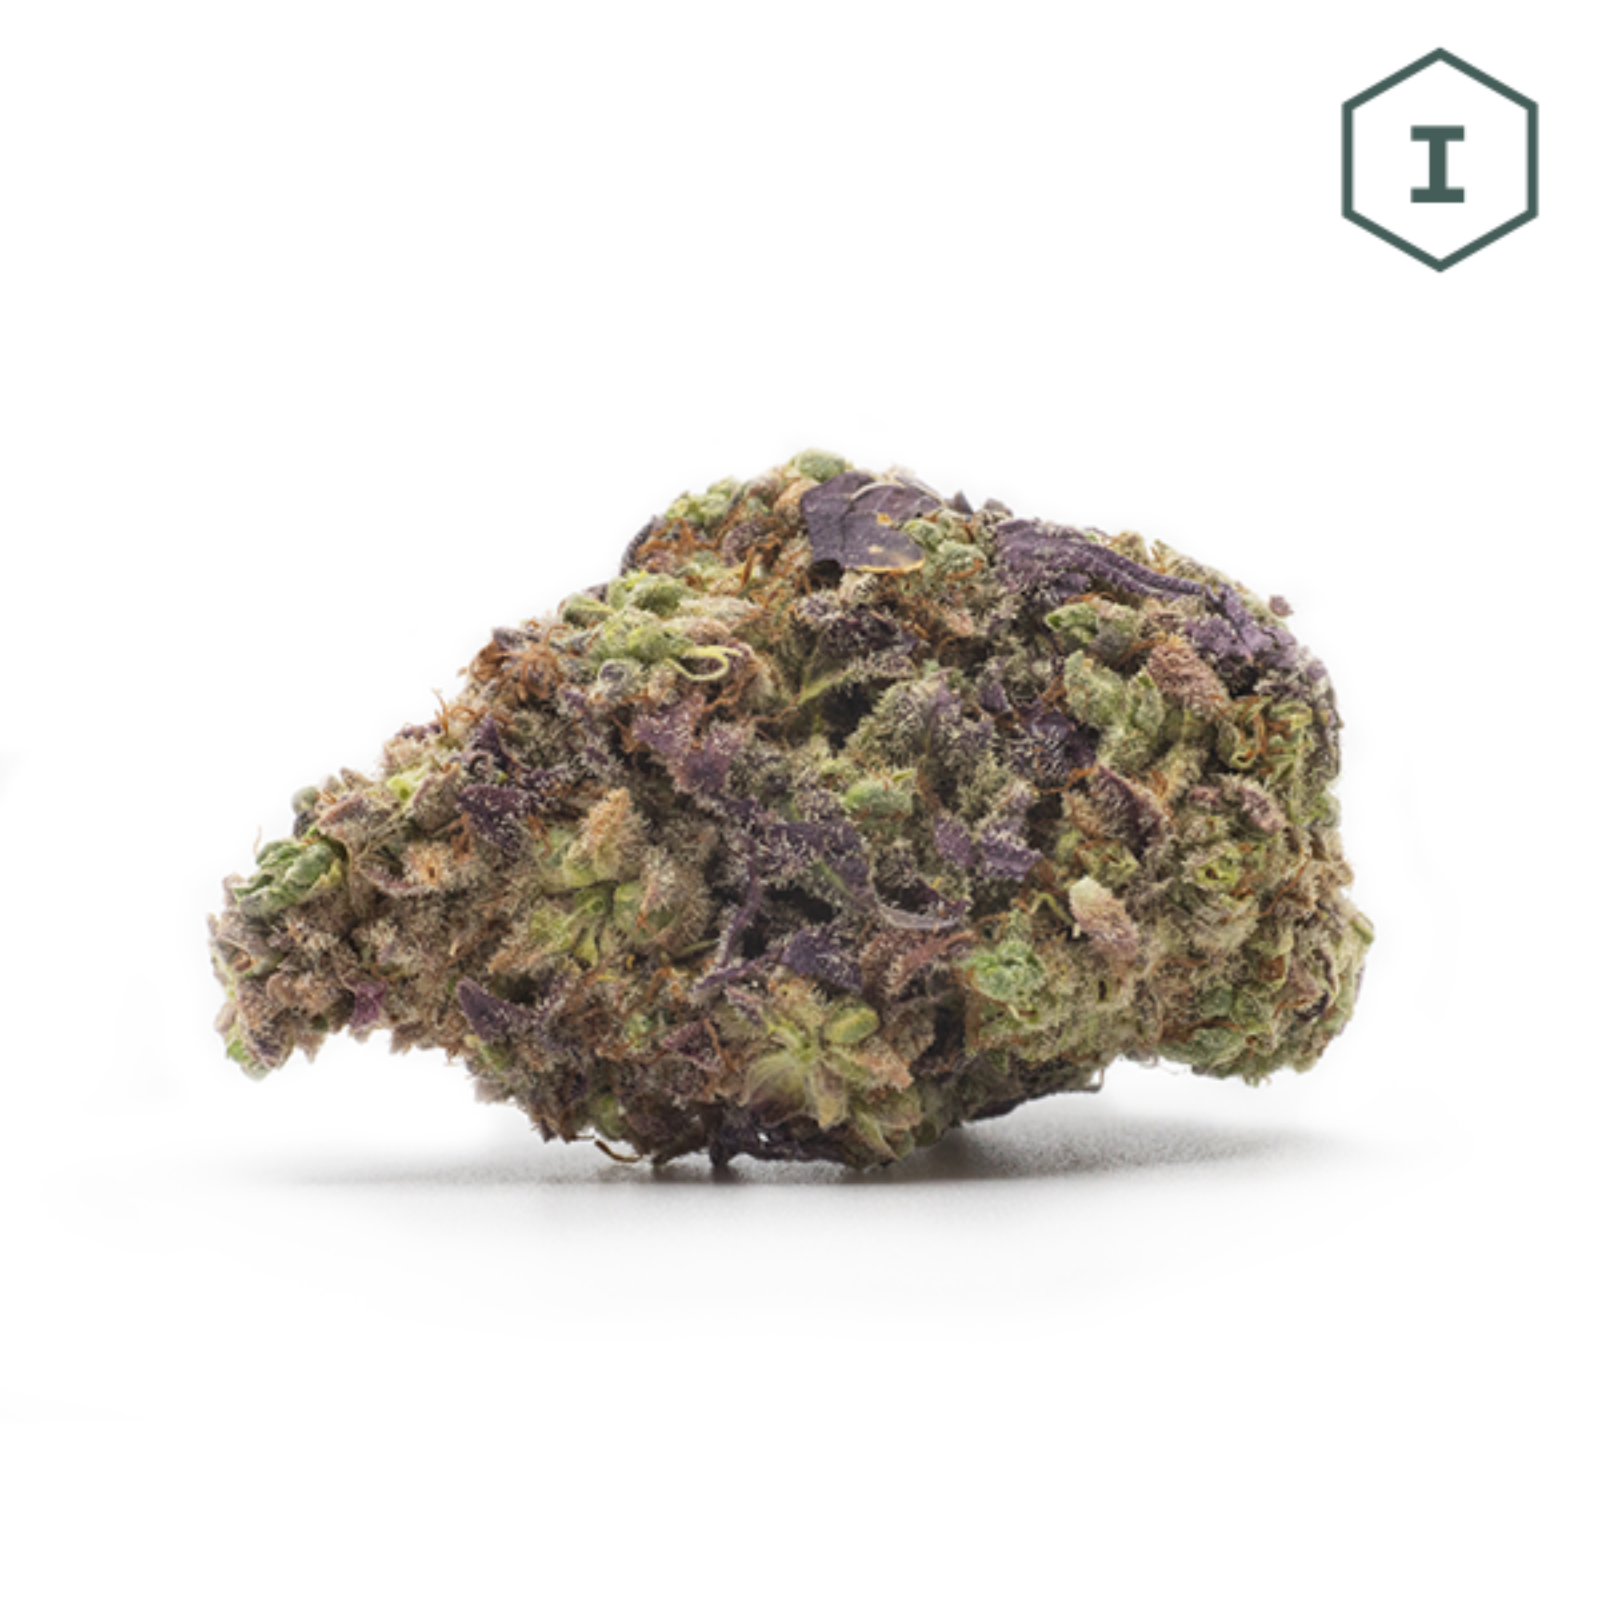 Gushers Marijuana - Indica - Nug Weed Cannabis Strain - PotValet